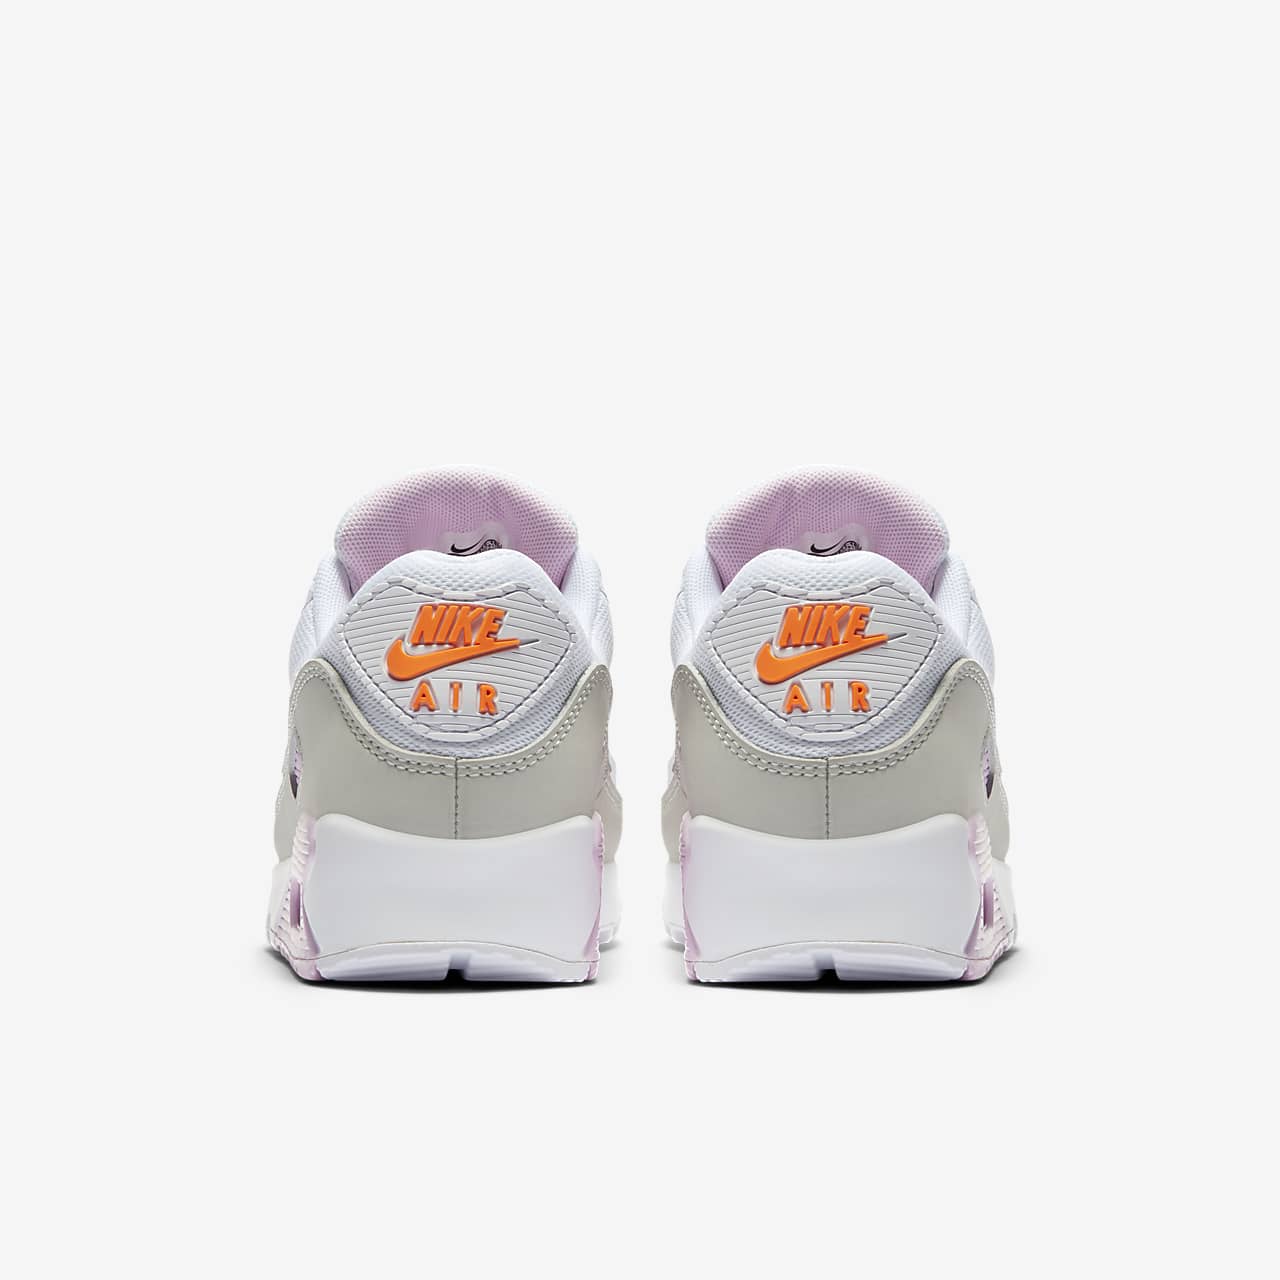 nike air max 90 baby pink sneaker